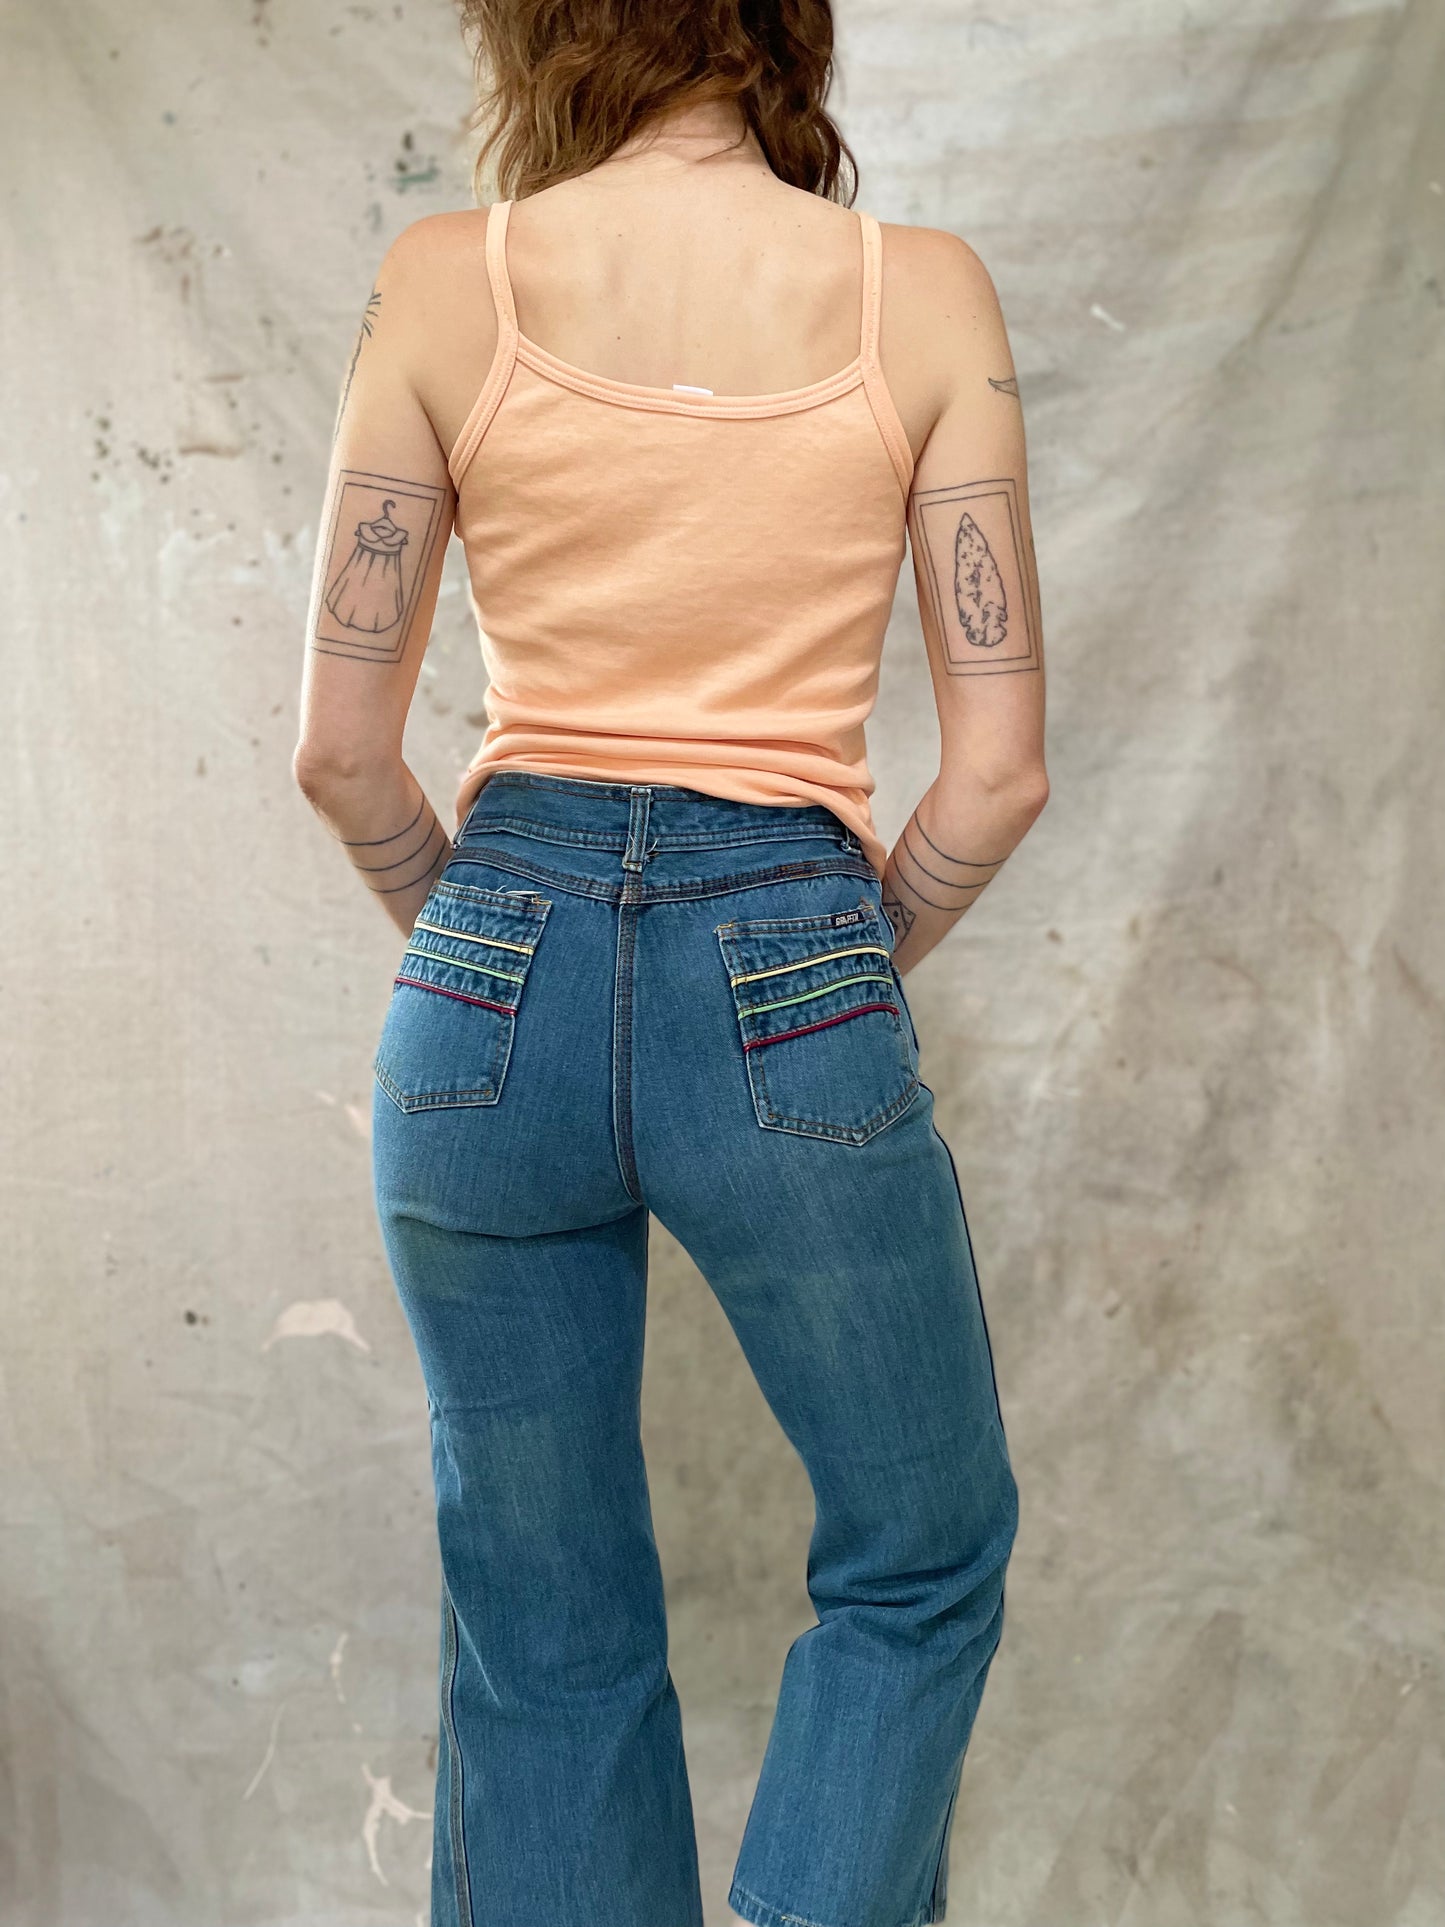 70s/80s American Graffiti Jeans